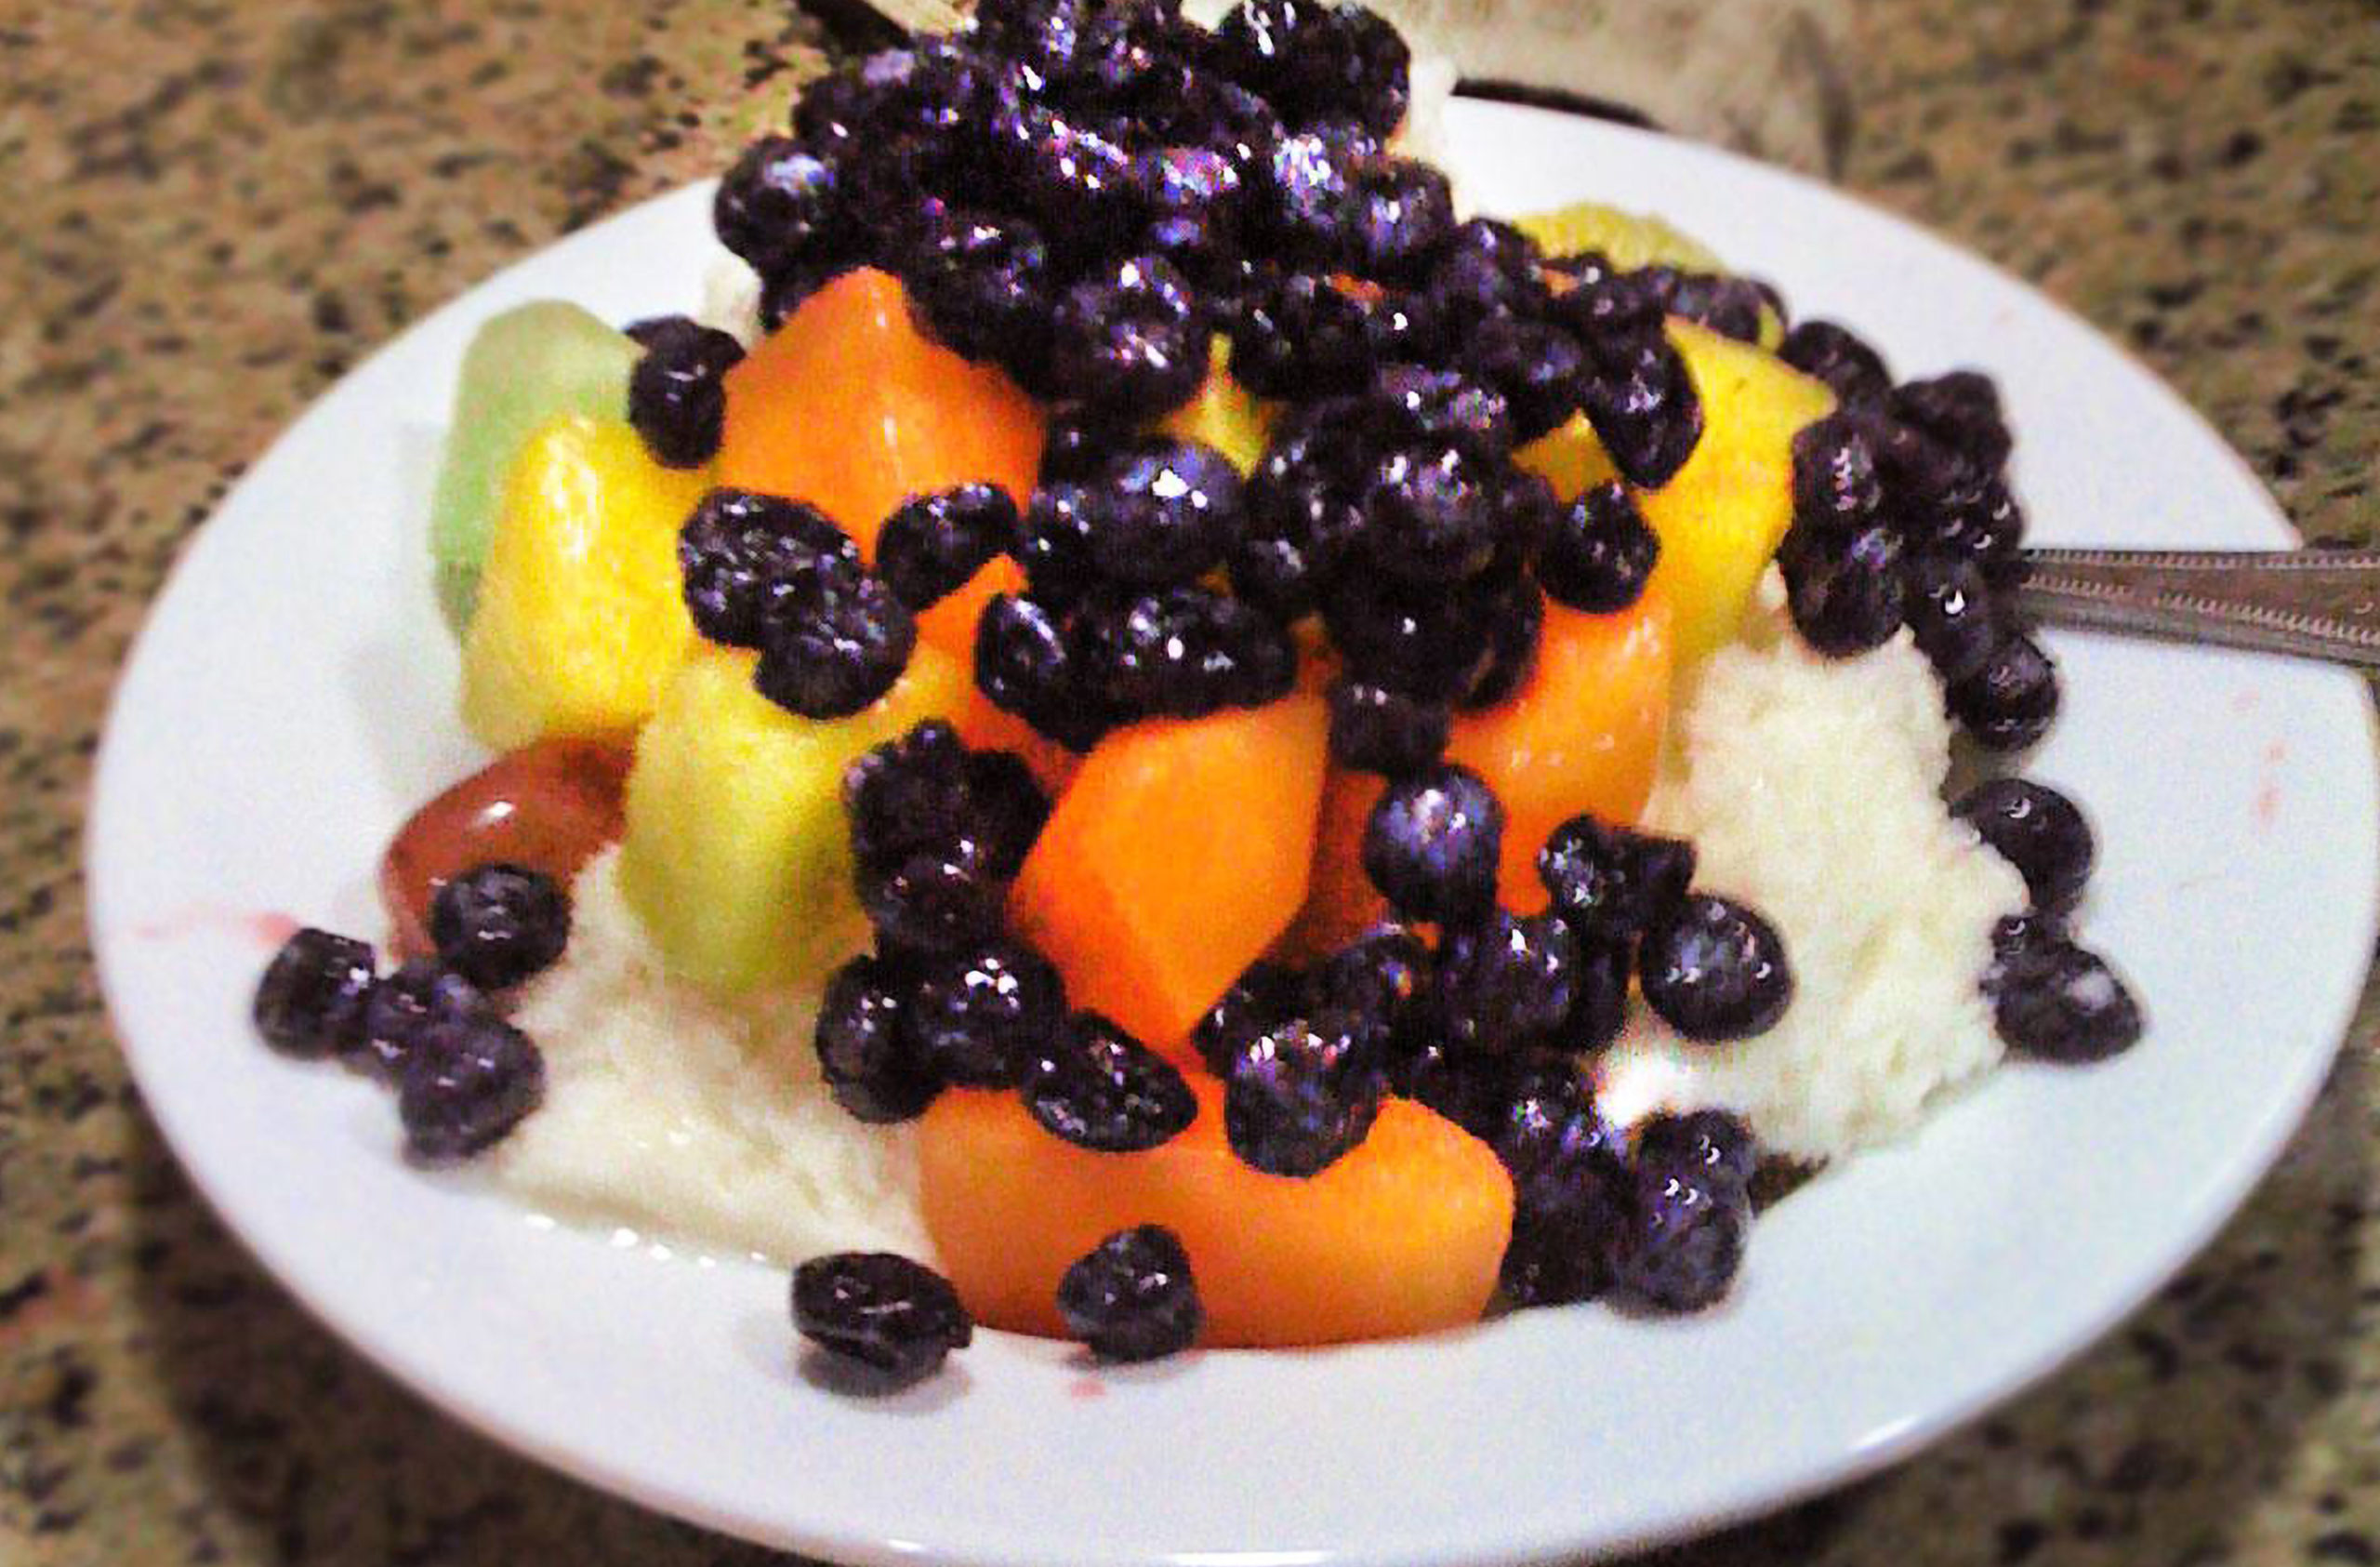 Choo's 2009 Steamed Rice with Glazed Raisins & Fruit